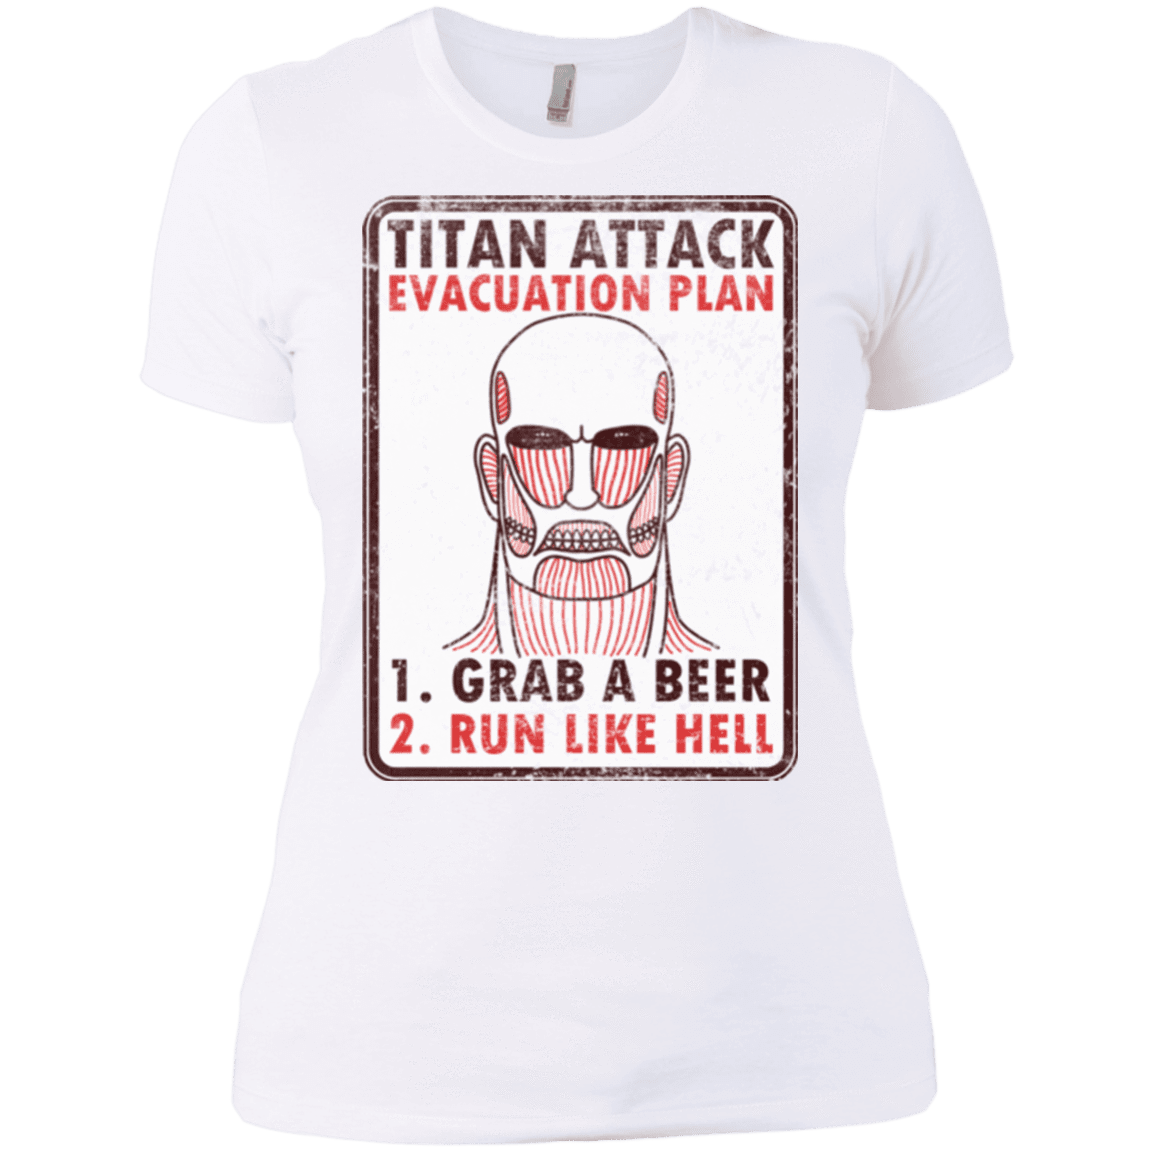 T-Shirts White / X-Small Titan plan Women's Premium T-Shirt